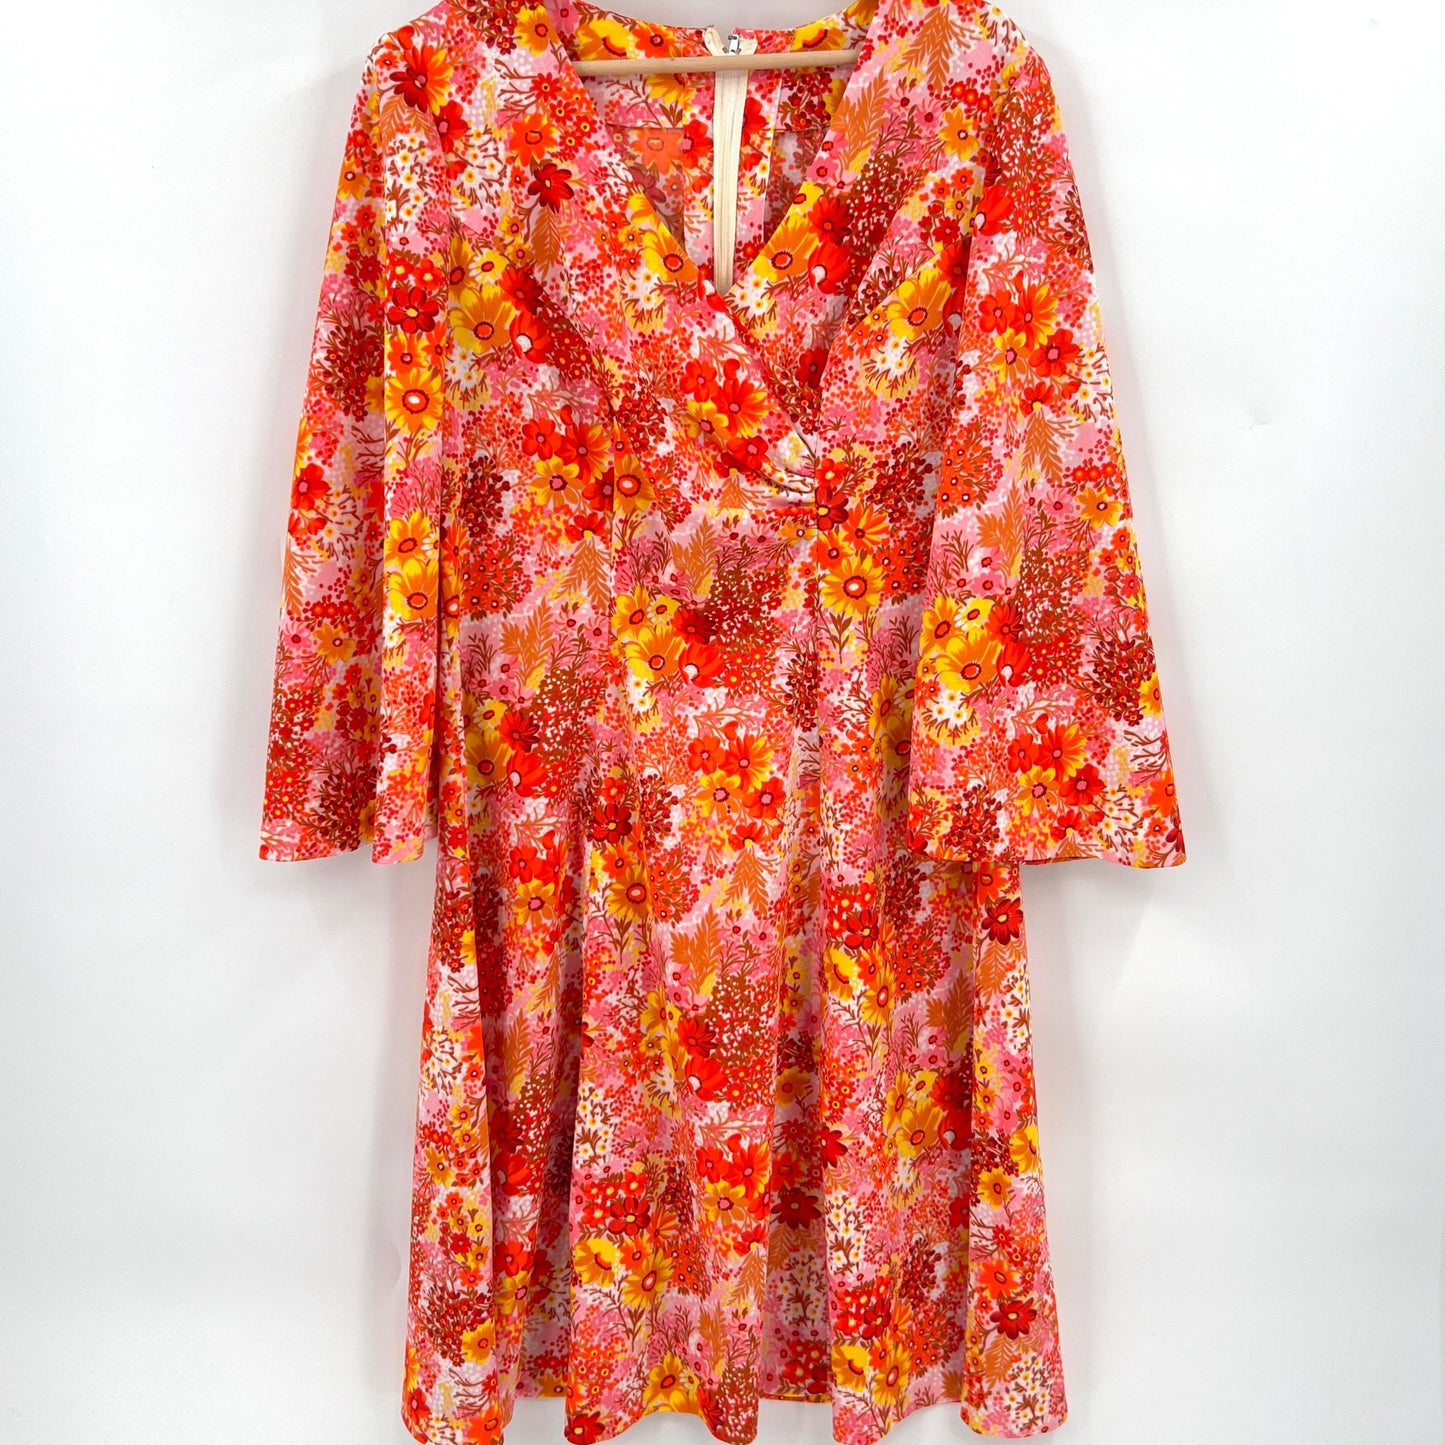 Vintage Handmade Floral 70s Style Dress XL